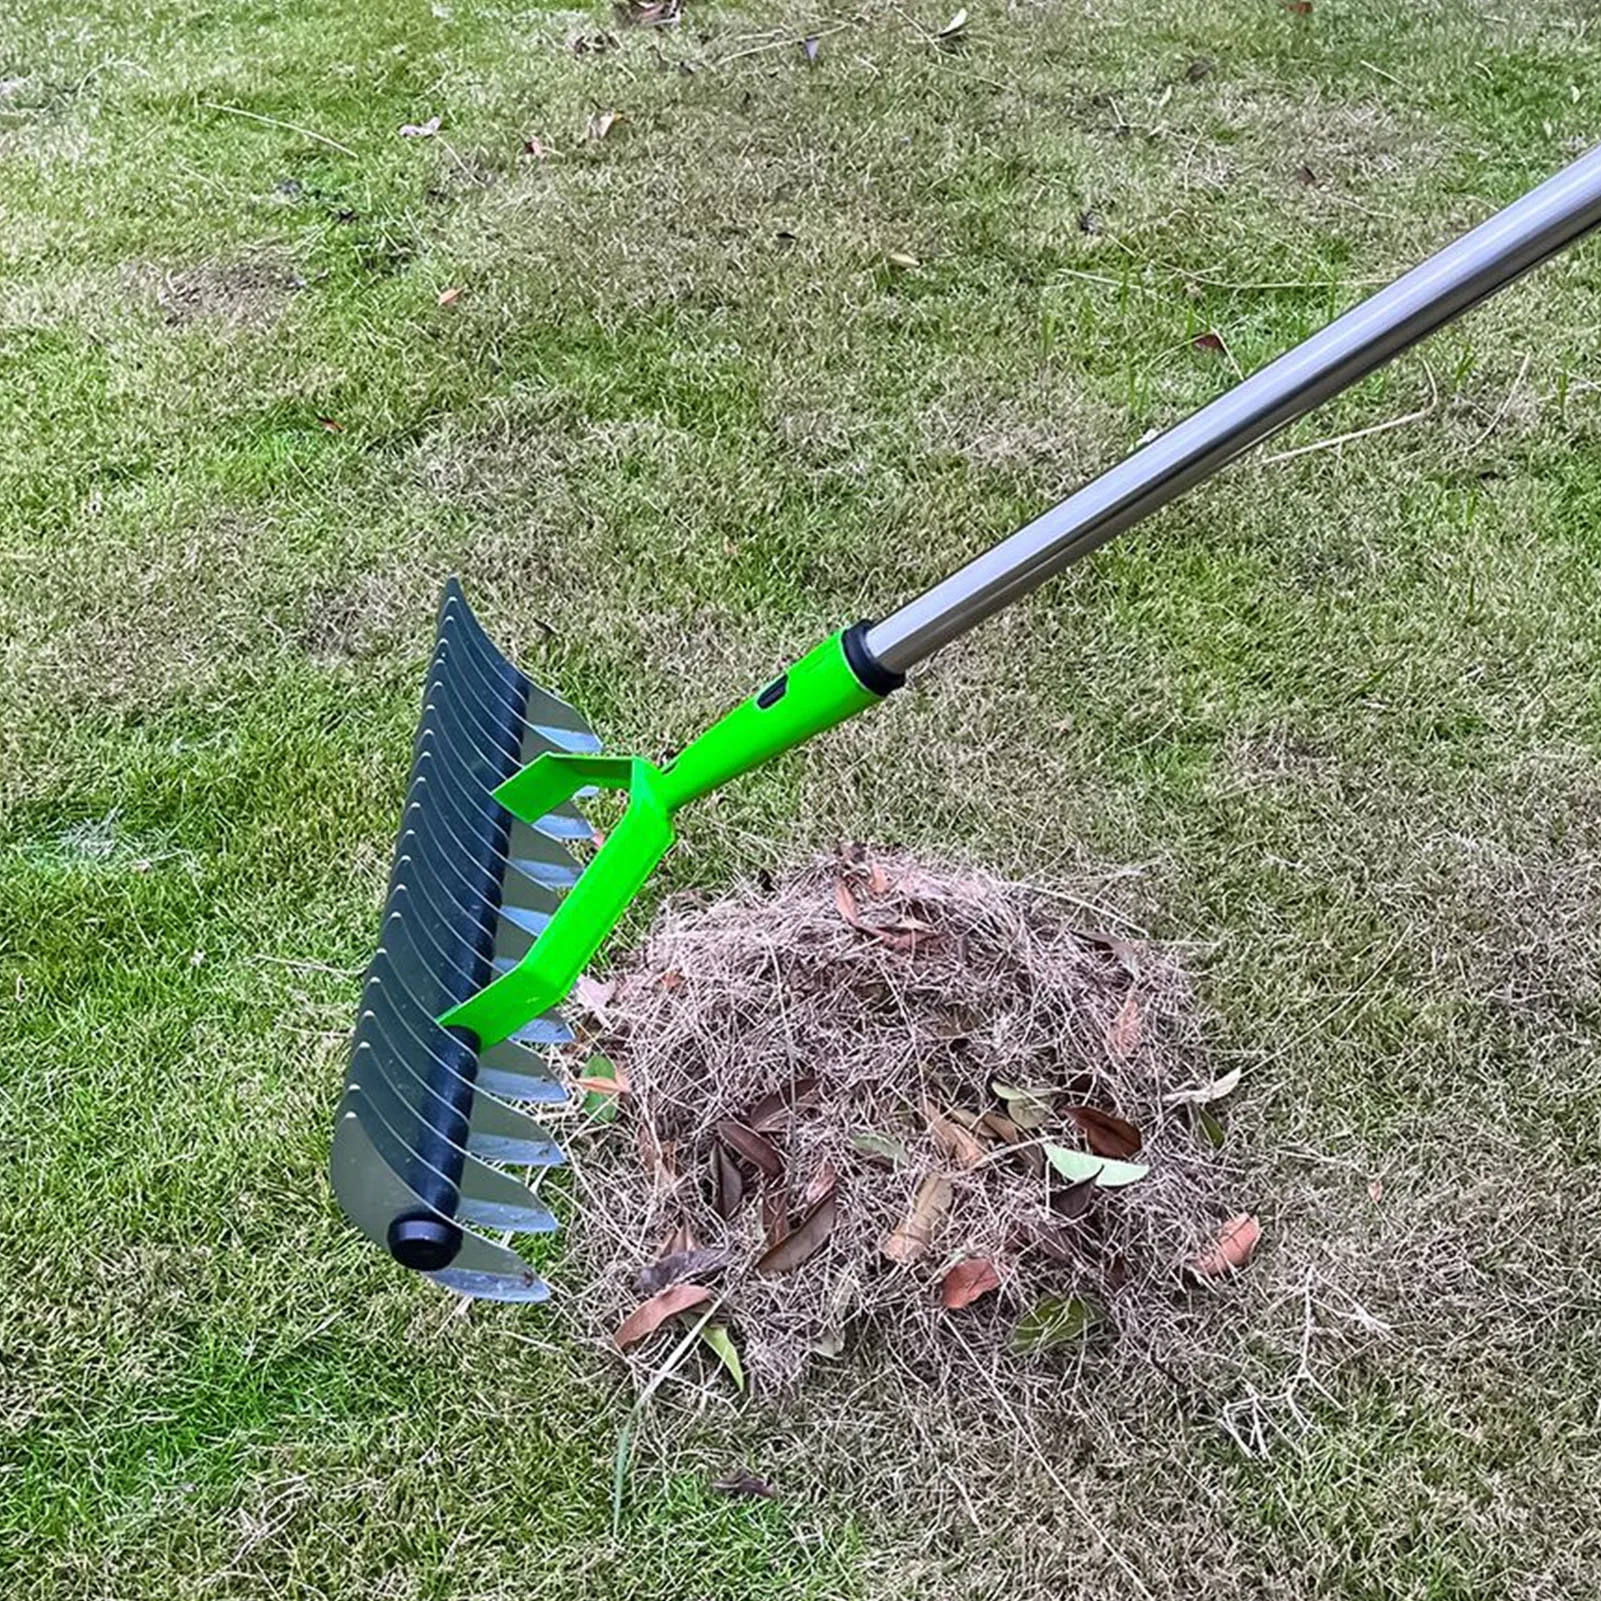 Thatch Rake 1.7m Alloy Steel Lawn Thatching Rake Garden Tool For Dead Grass Cleaning Soil Loosening